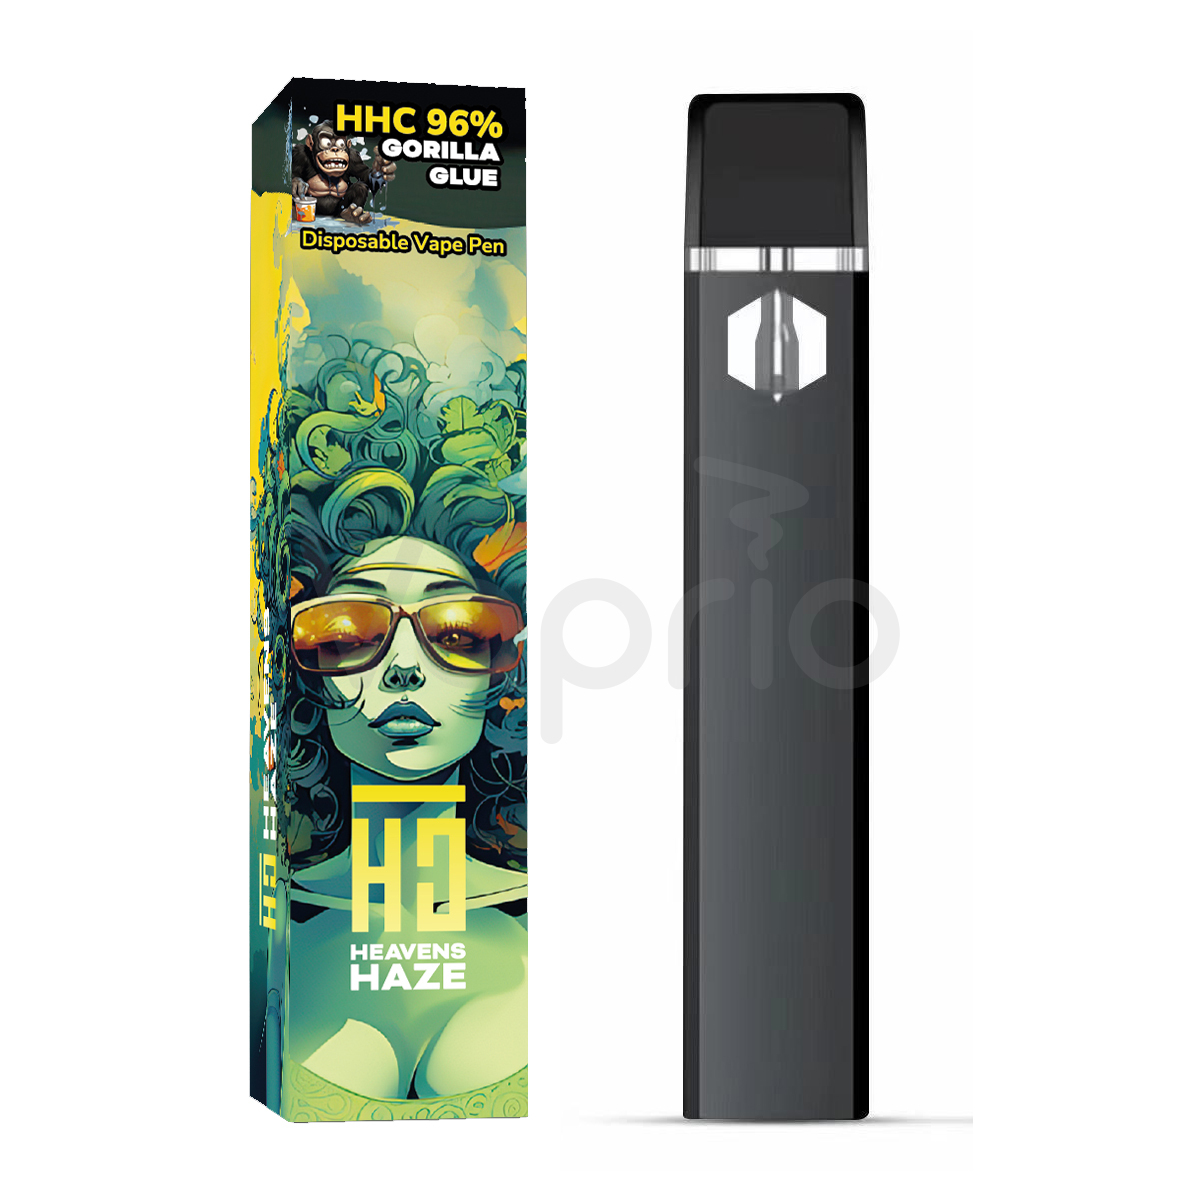 HHC Gorilla Glue 96% HHC - jednorázová e-cigareta 1ml